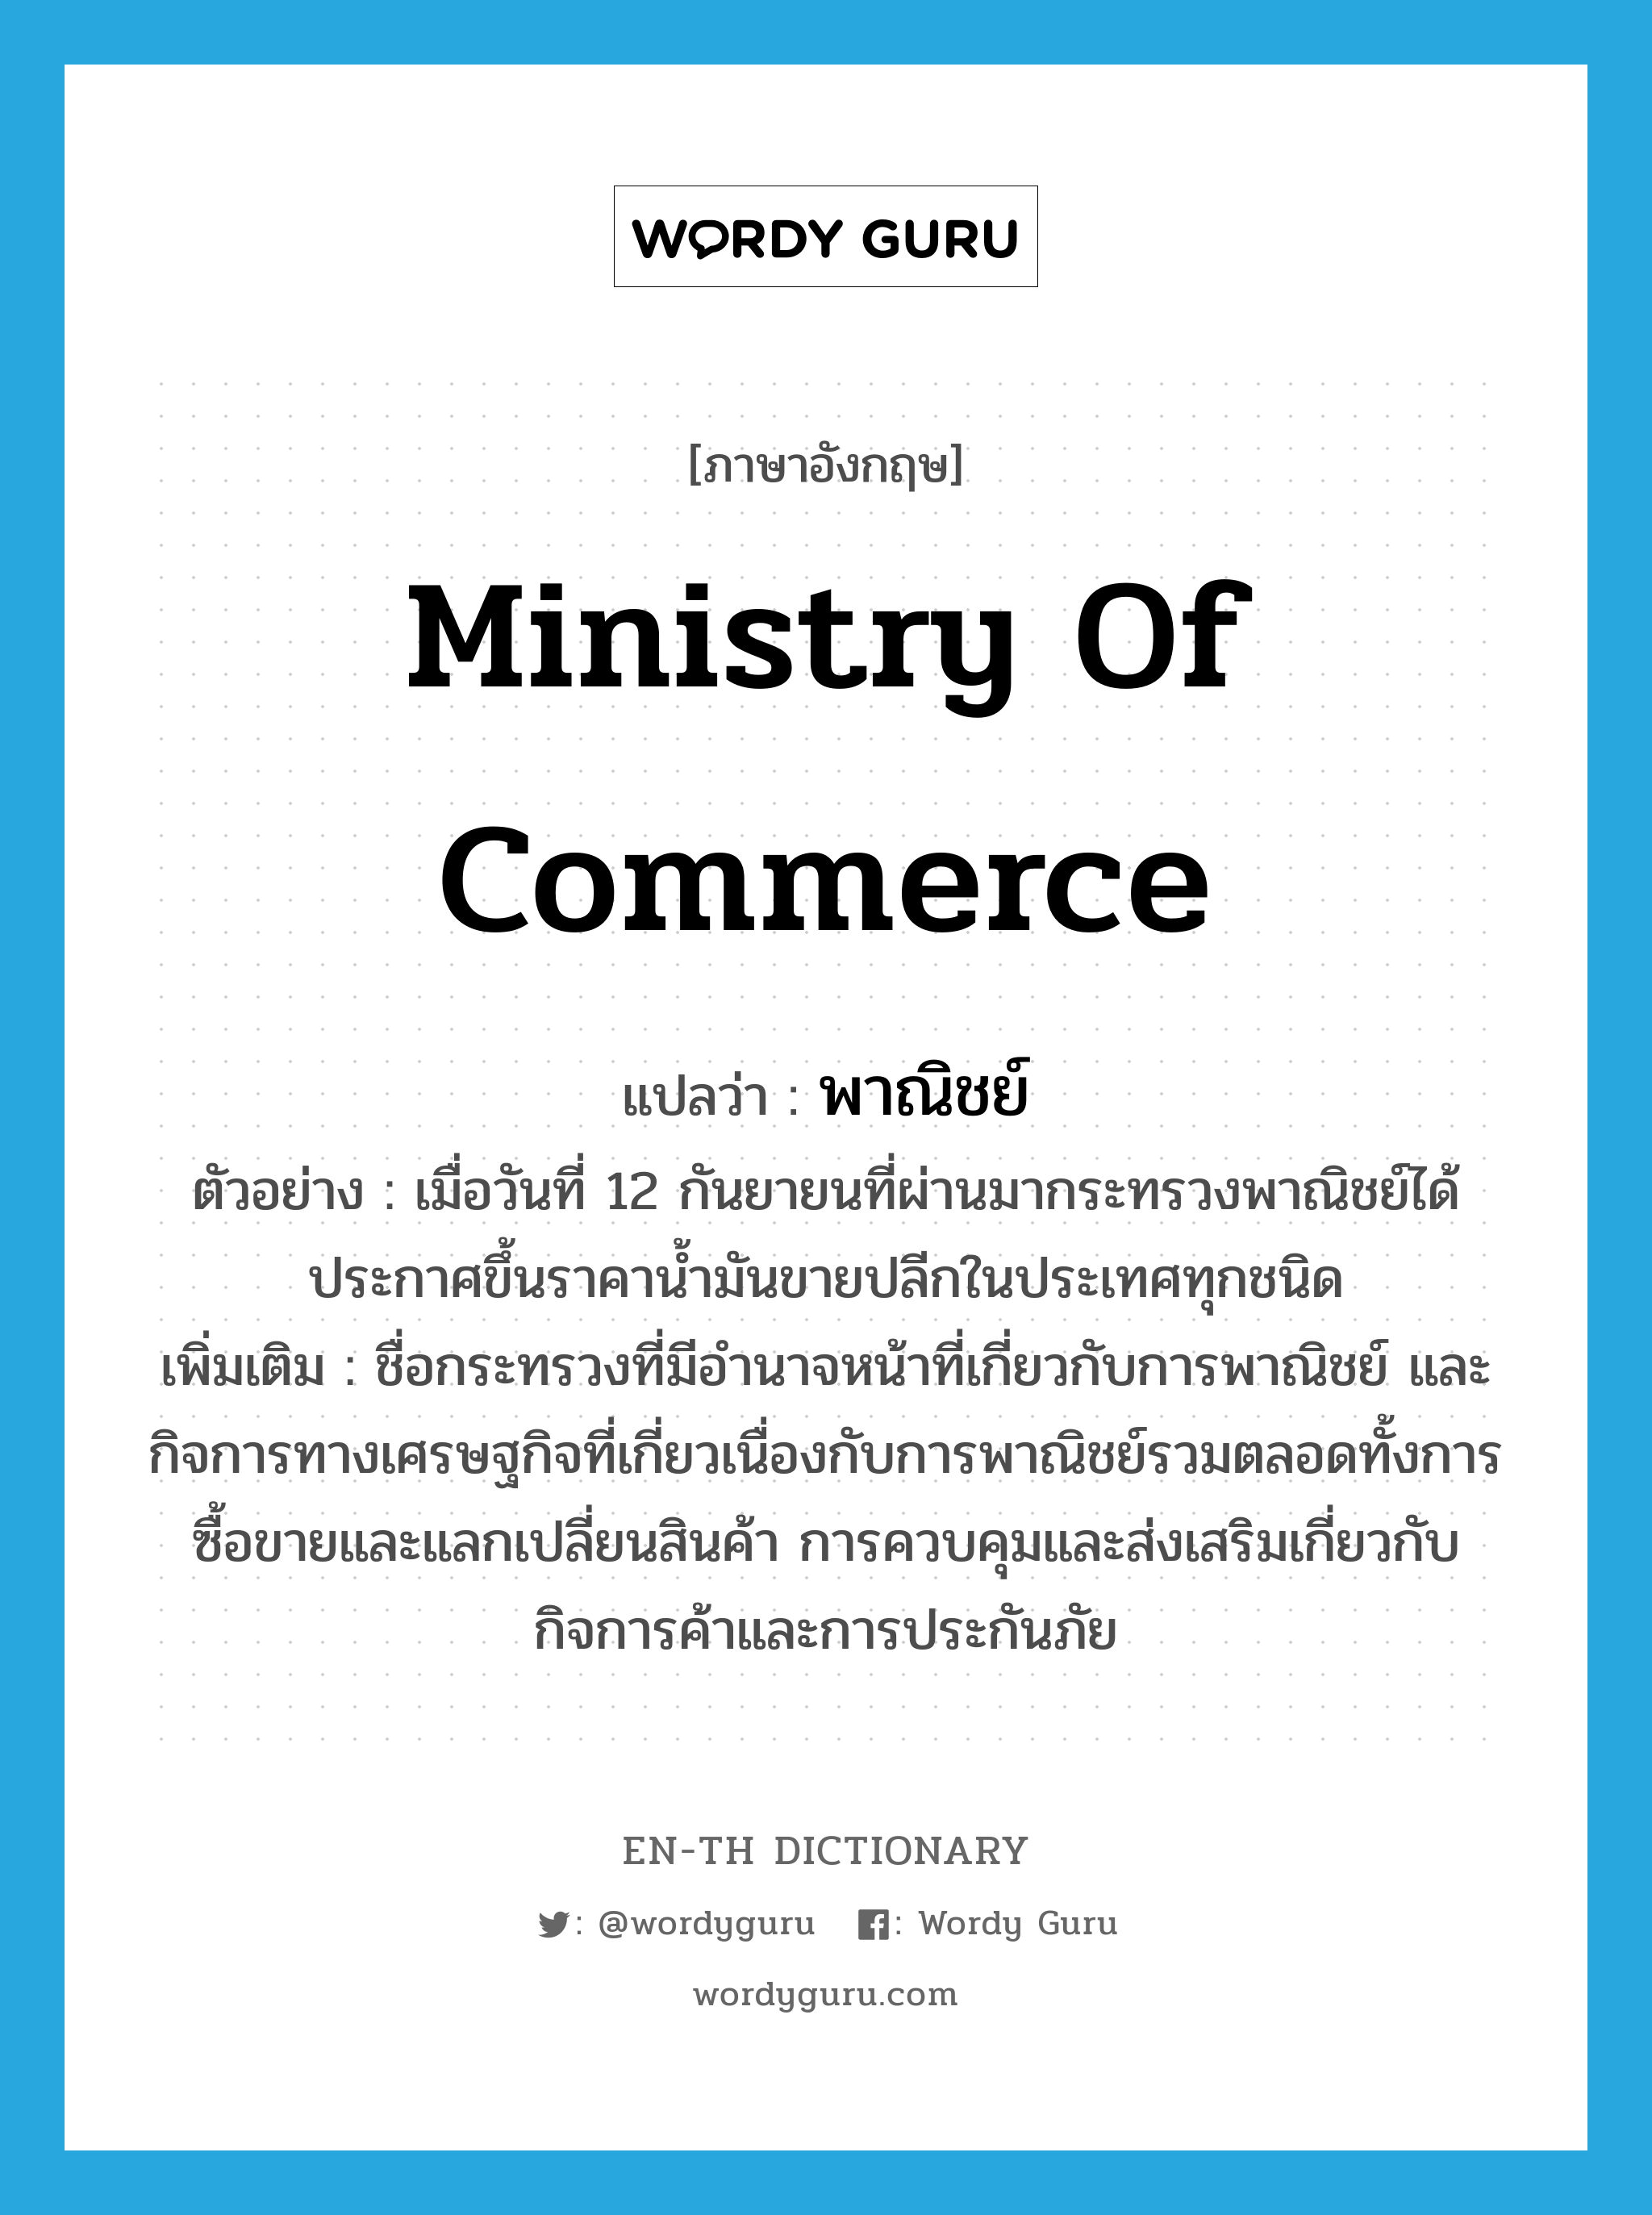 Ministry of Commerce แปลว่า?, คำศัพท์ภาษาอังกฤษ Ministry of Commerce แปลว่า พาณิชย์ ประเภท N ตัวอย่าง เมื่อวันที่ 12 กันยายนที่ผ่านมากระทรวงพาณิชย์ได้ประกาศขึ้นราคาน้ำมันขายปลีกในประเทศทุกชนิด เพิ่มเติม ชื่อกระทรวงที่มีอำนาจหน้าที่เกี่ยวกับการพาณิชย์ และกิจการทางเศรษฐกิจที่เกี่ยวเนื่องกับการพาณิชย์รวมตลอดทั้งการซื้อขายและแลกเปลี่ยนสินค้า การควบคุมและส่งเสริมเกี่ยวกับกิจการค้าและการประกันภัย หมวด N